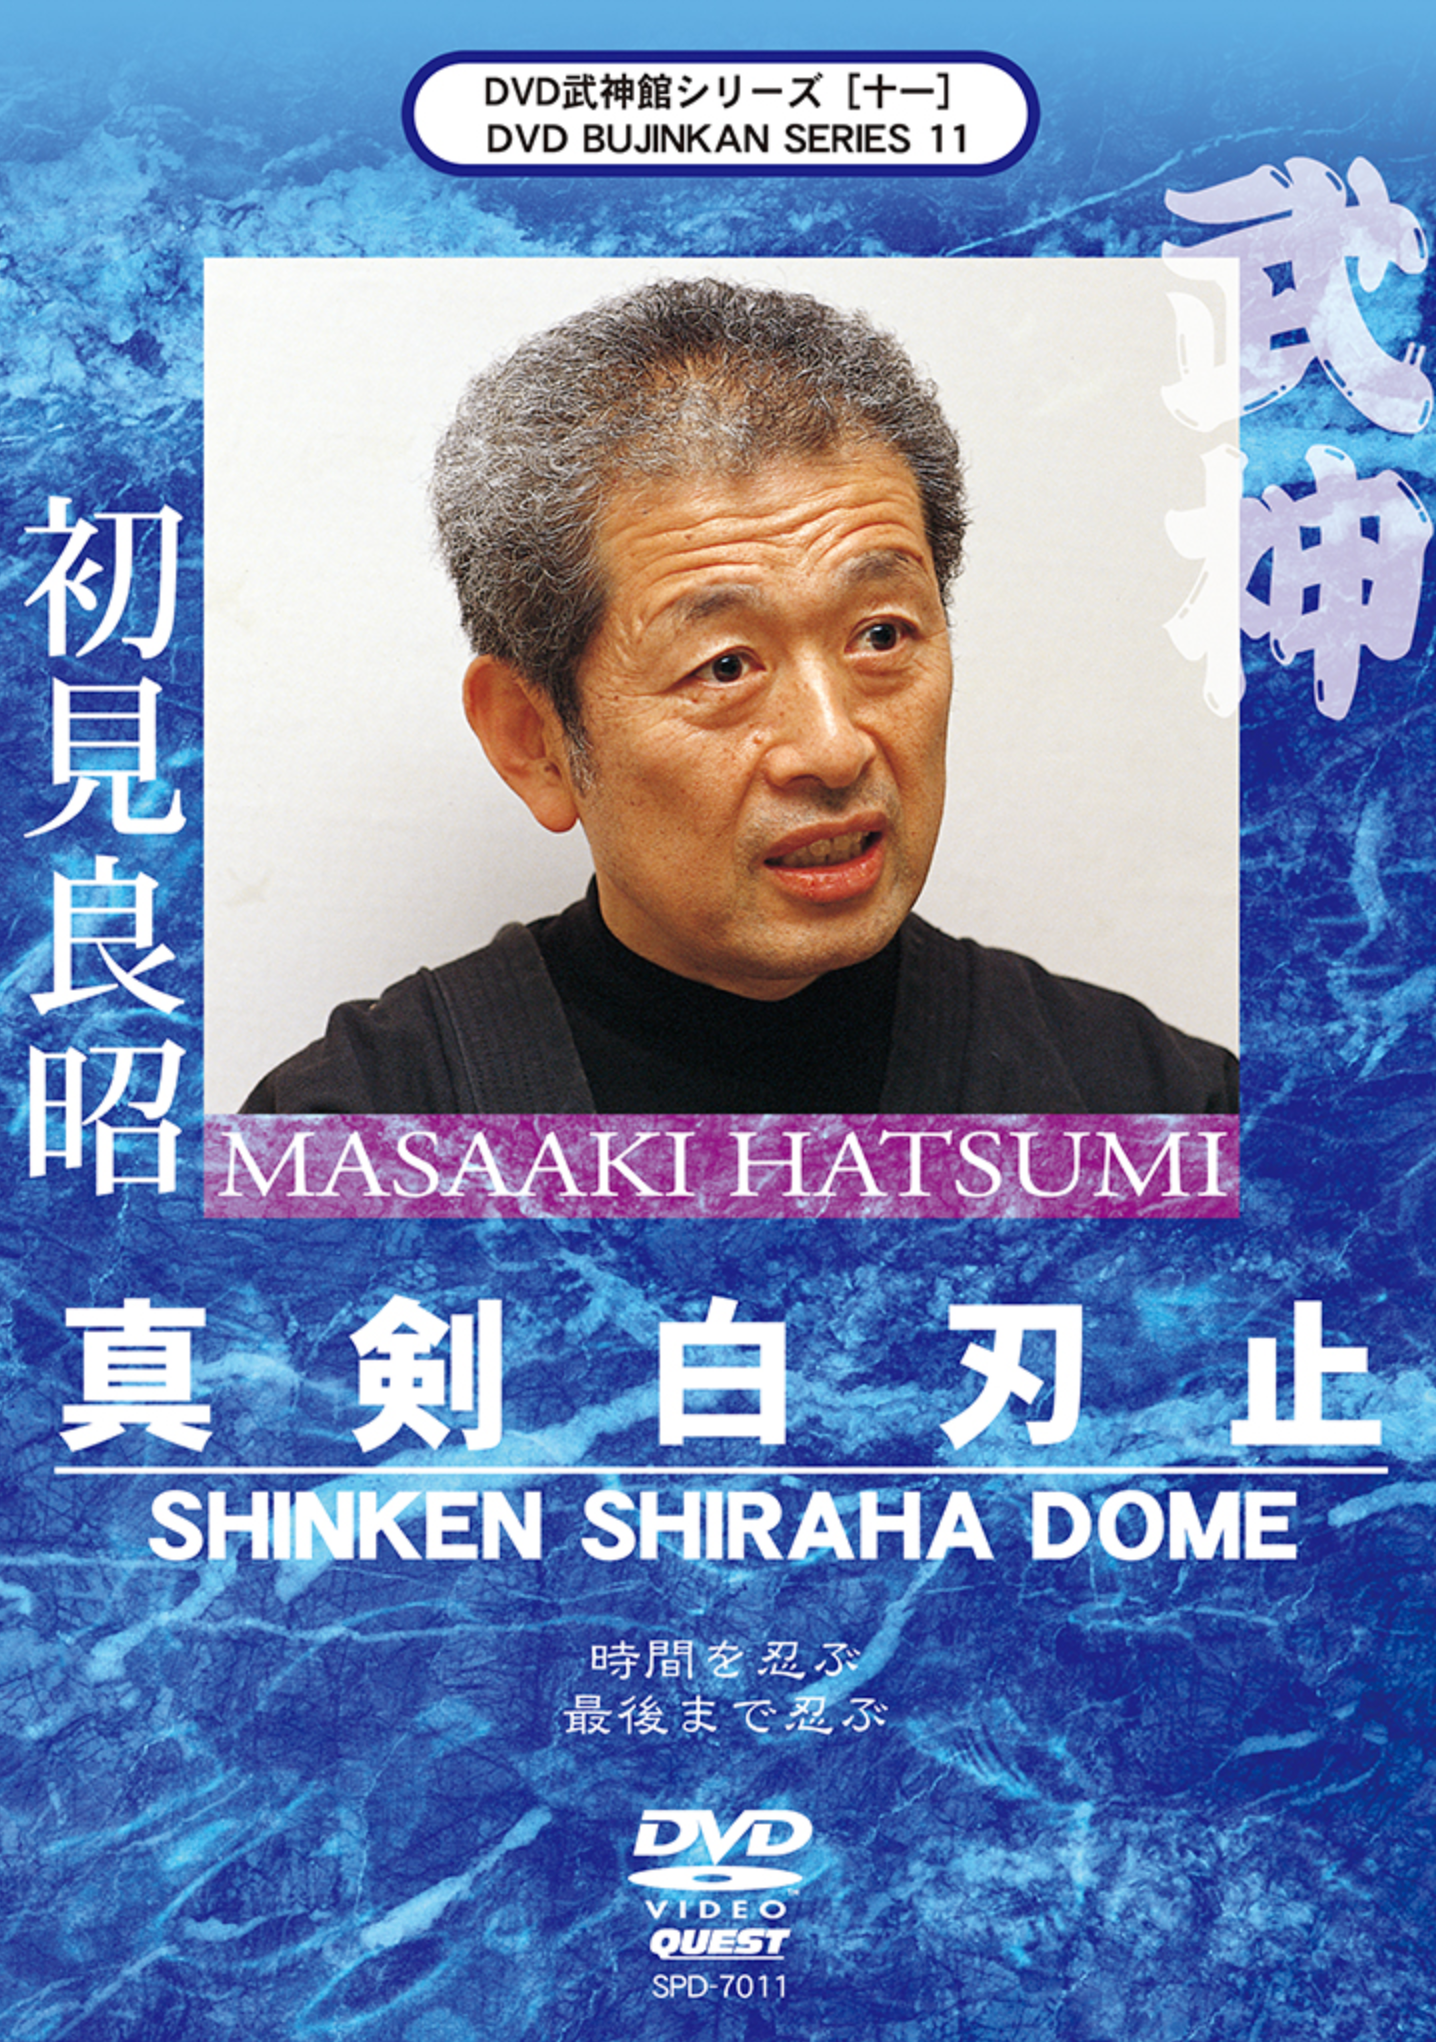 Bujinkan DVD Series 11: Shinken Shiraha Dome with Masaaki Hatsumi - Budovideos Inc